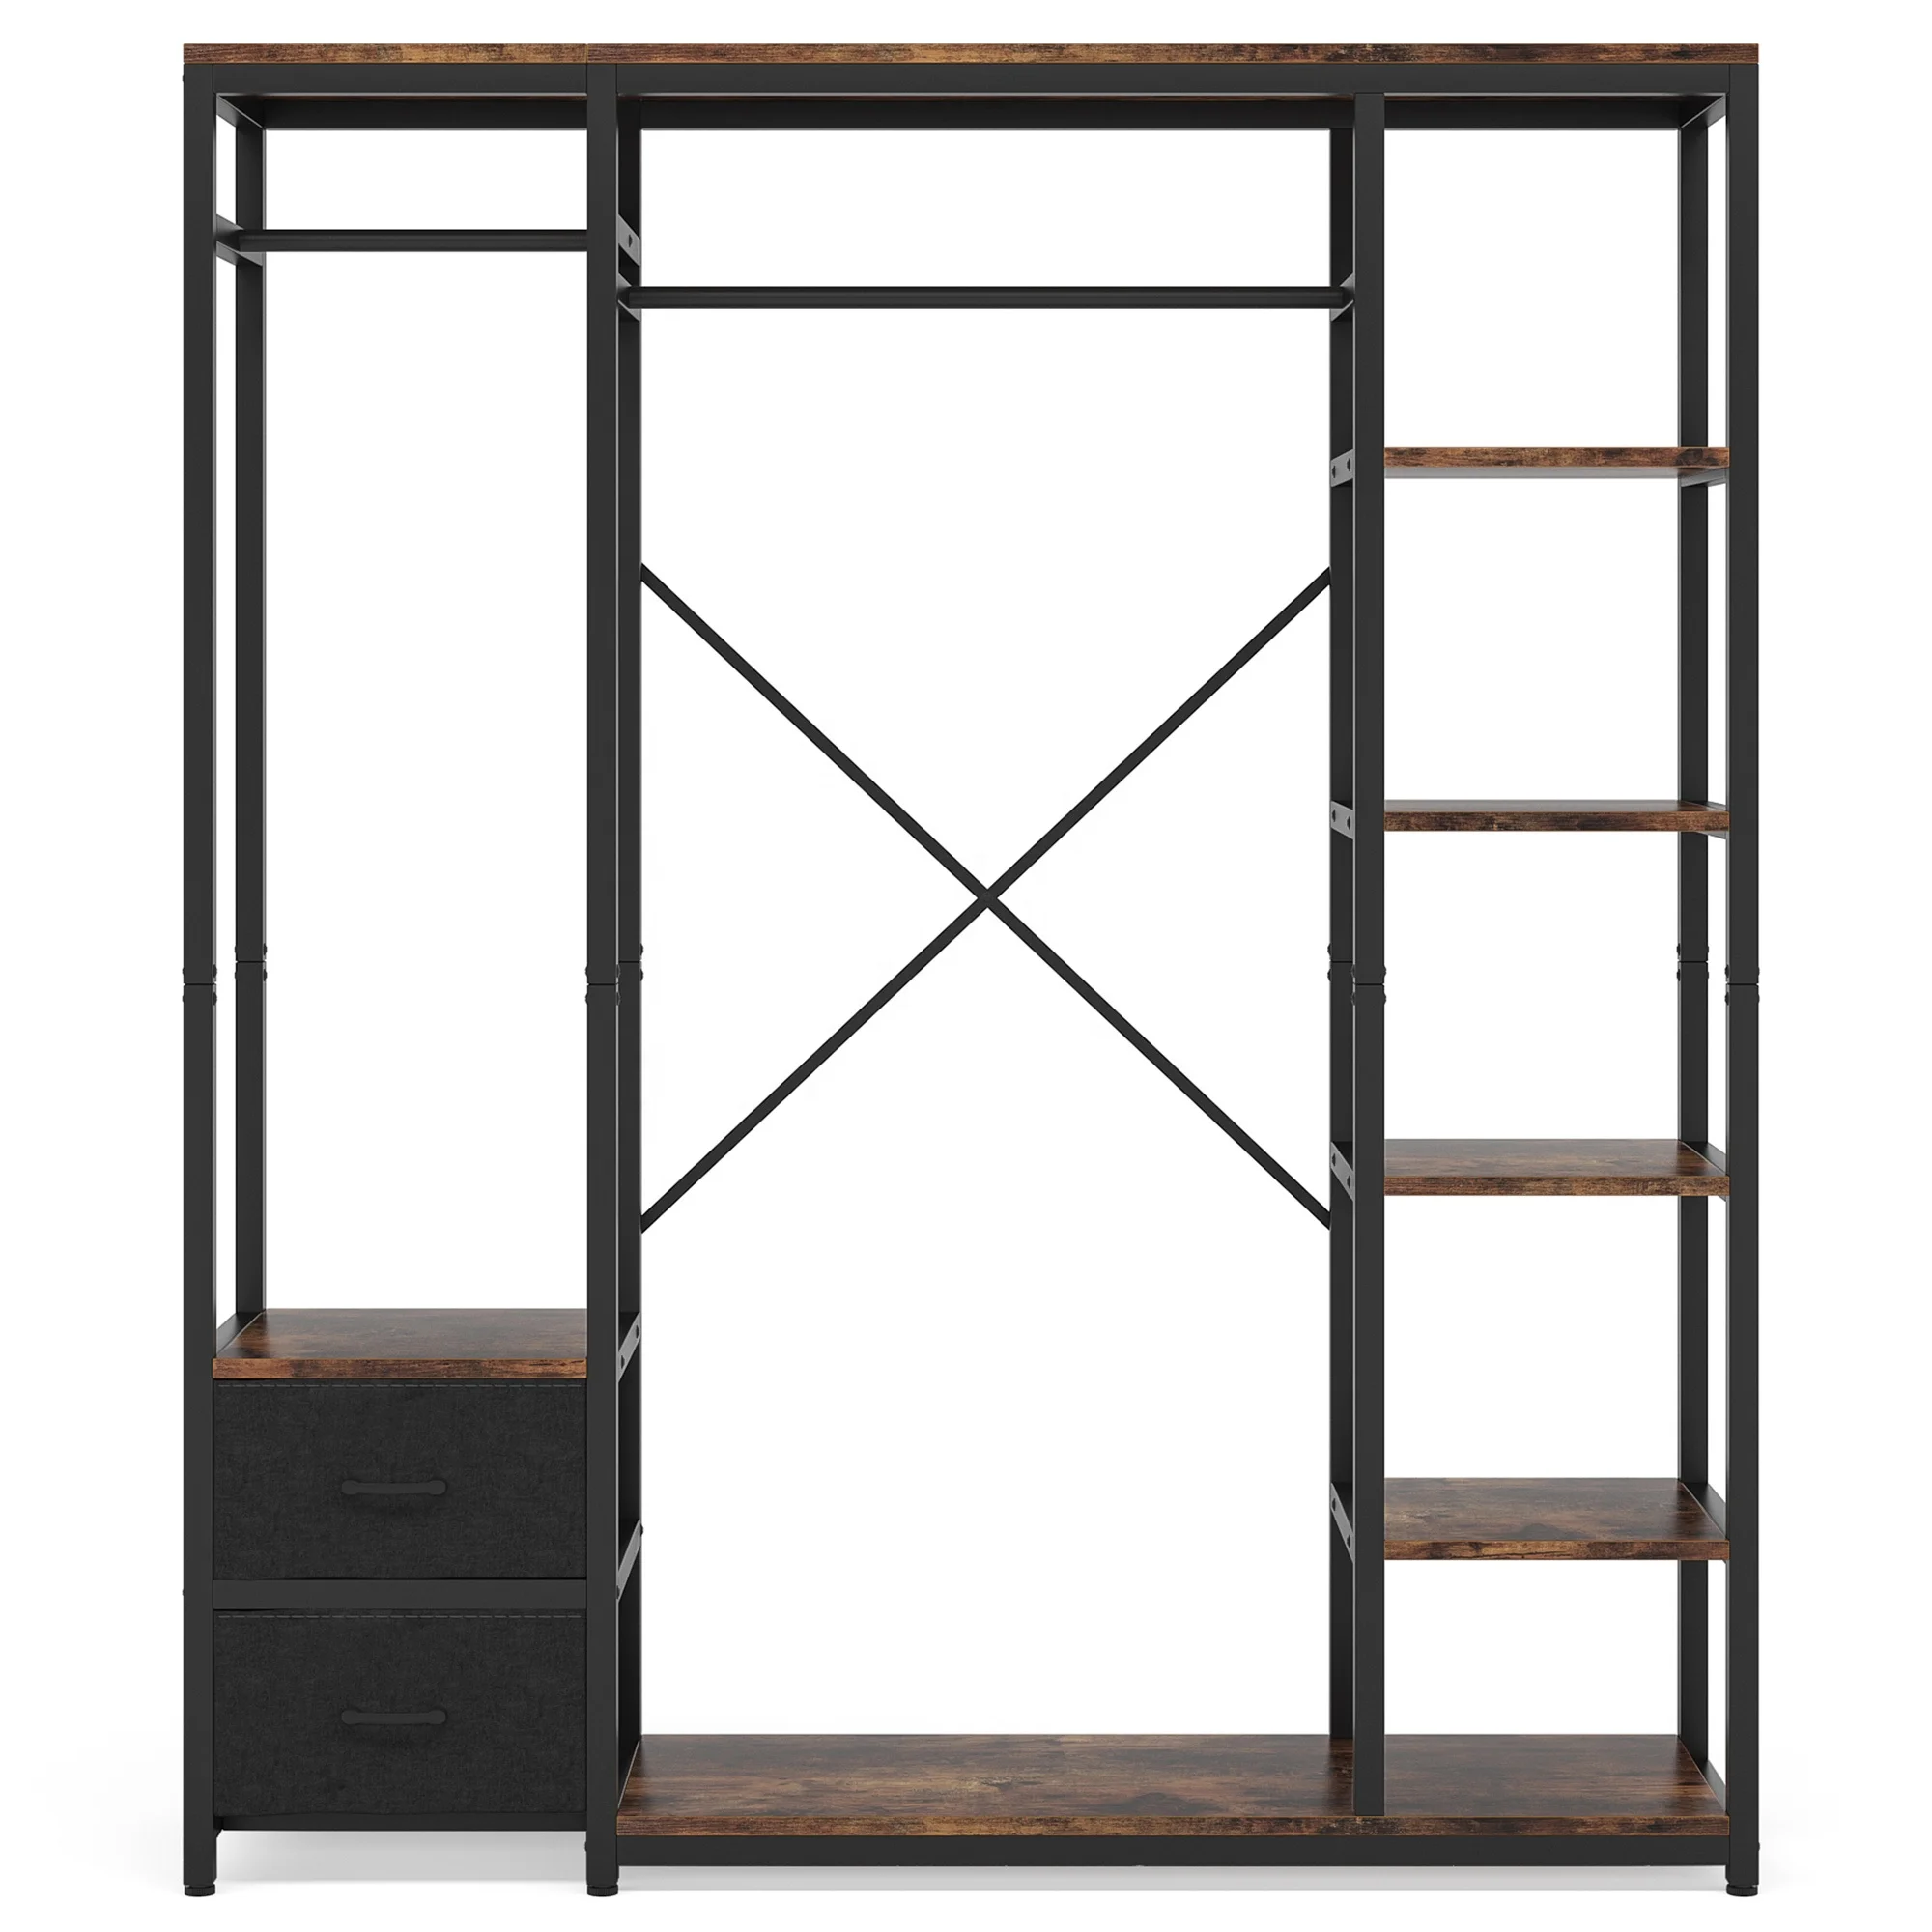 Modern Metal Frame Wooden Clothes Armoire Wardrobe set display shelving rack steel closet organizer bedroom furniture